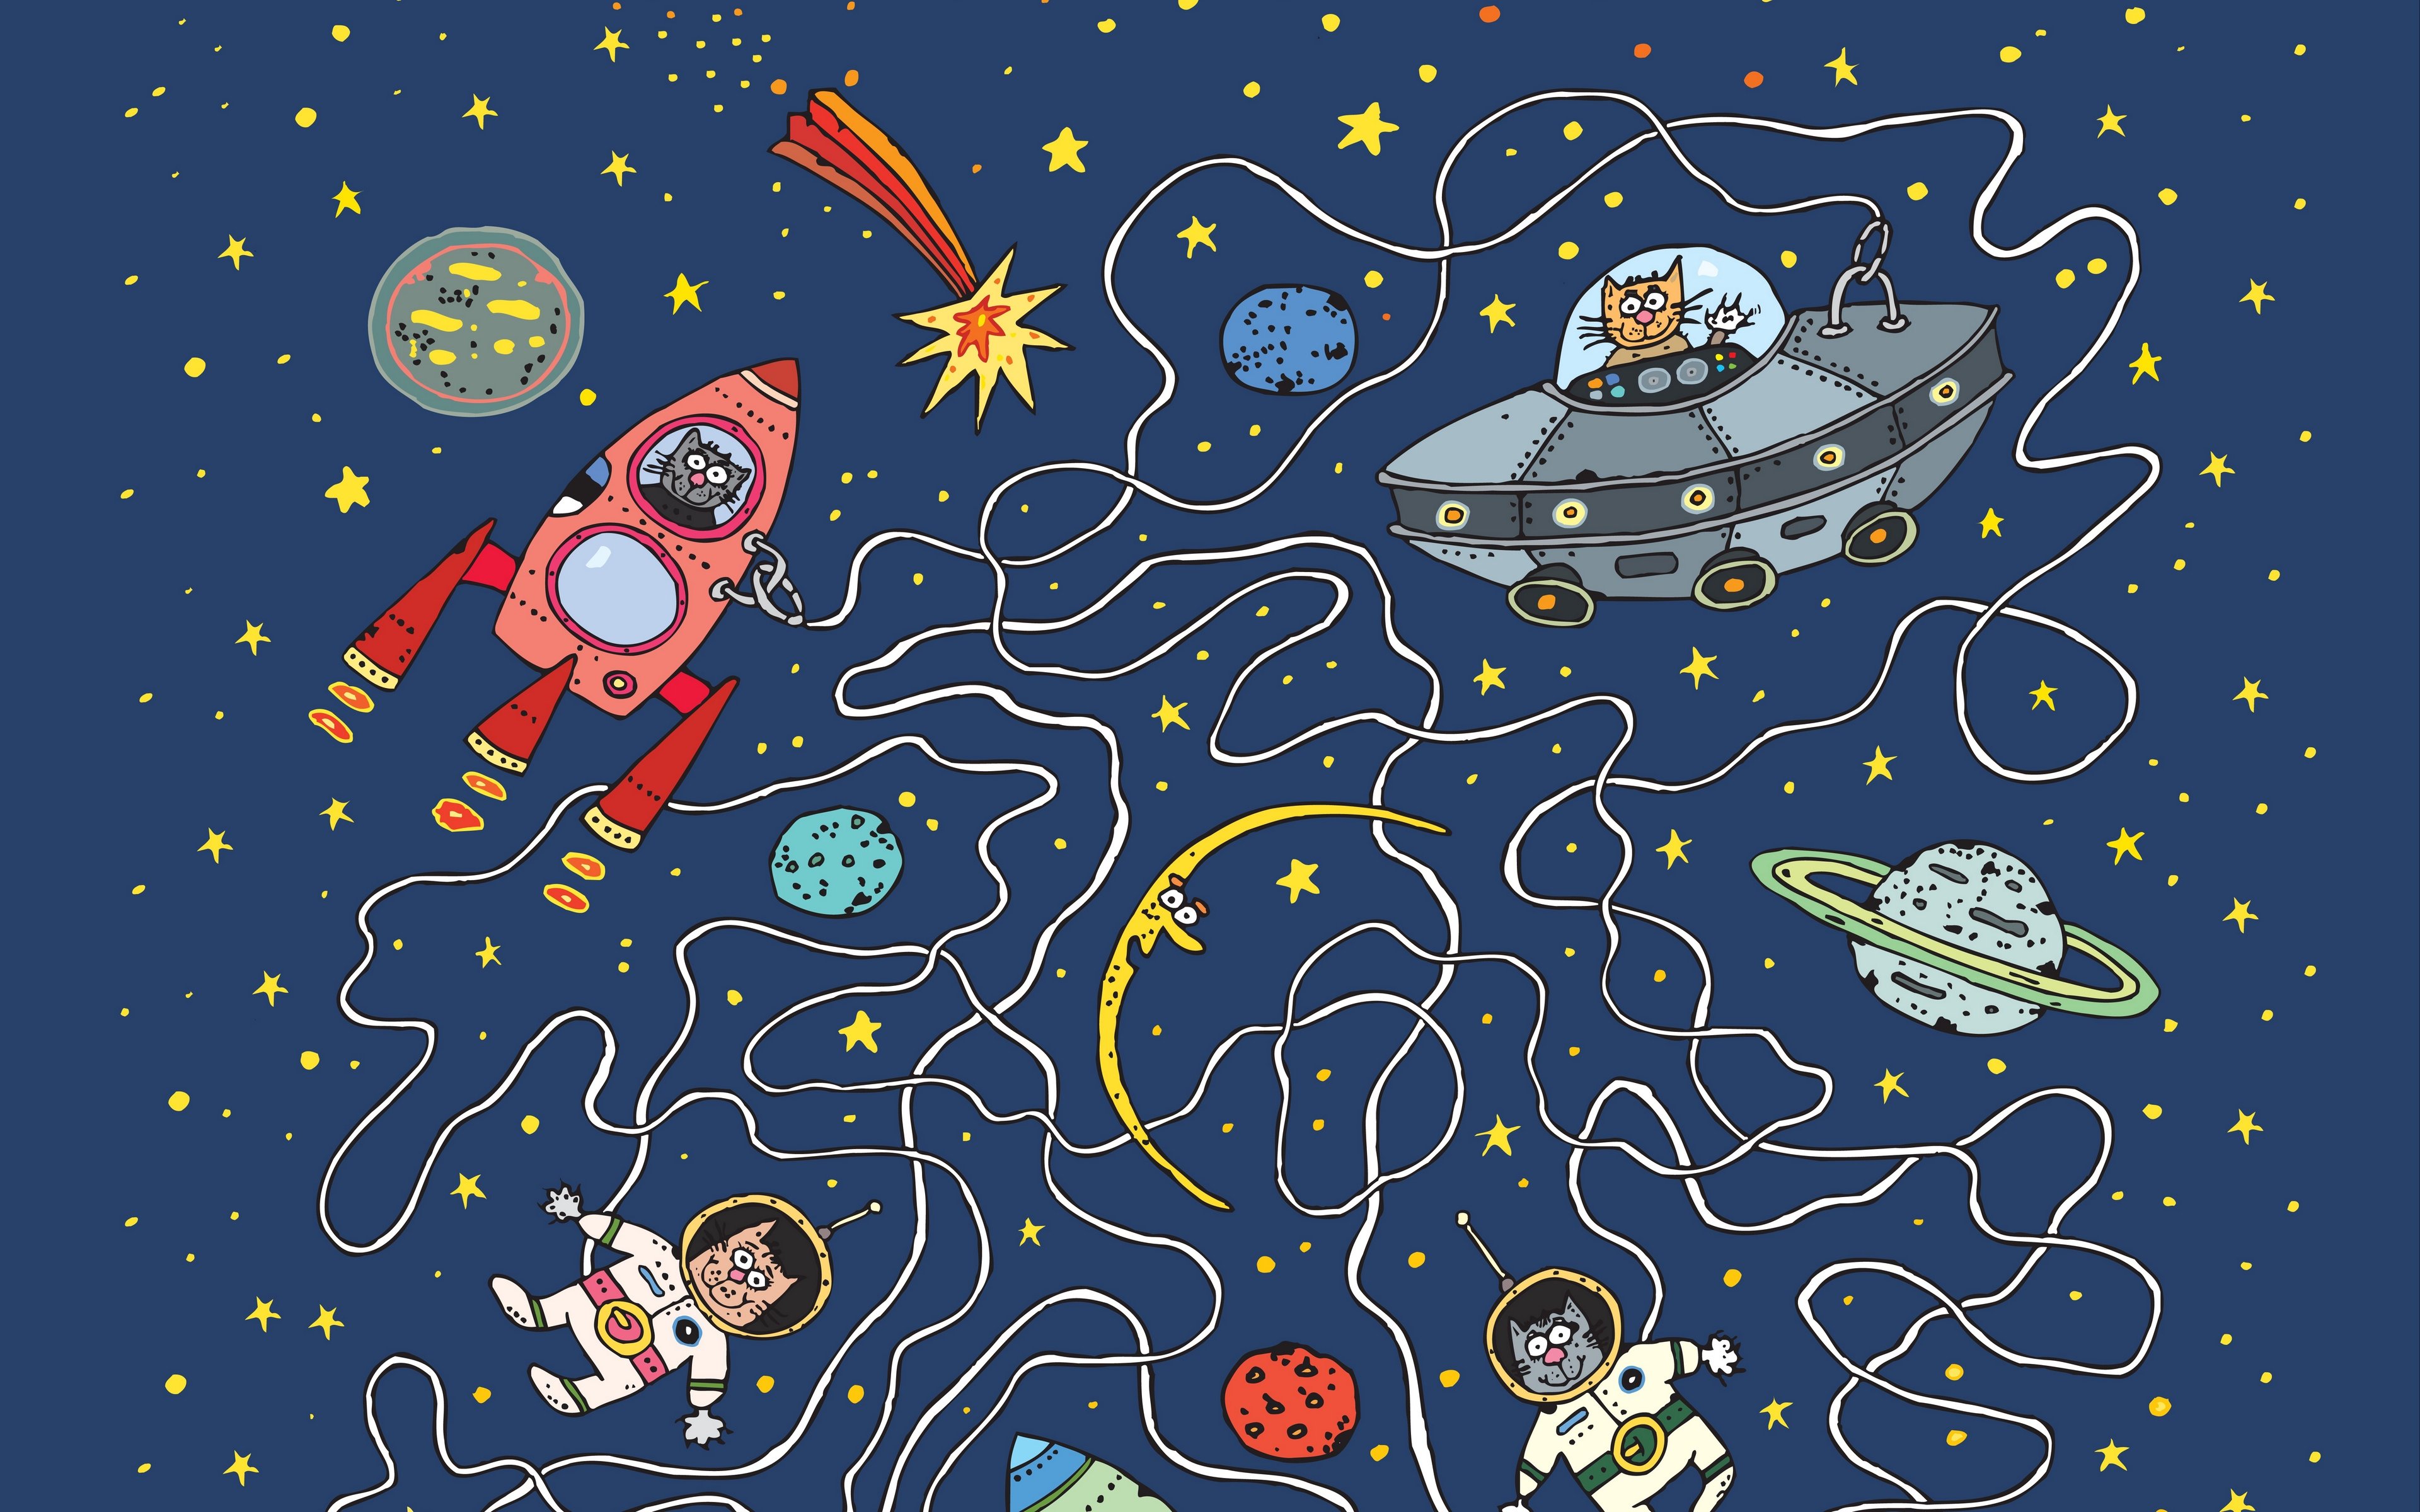 Download wallpapers 3840x2400 astronauts, cats, rocket.